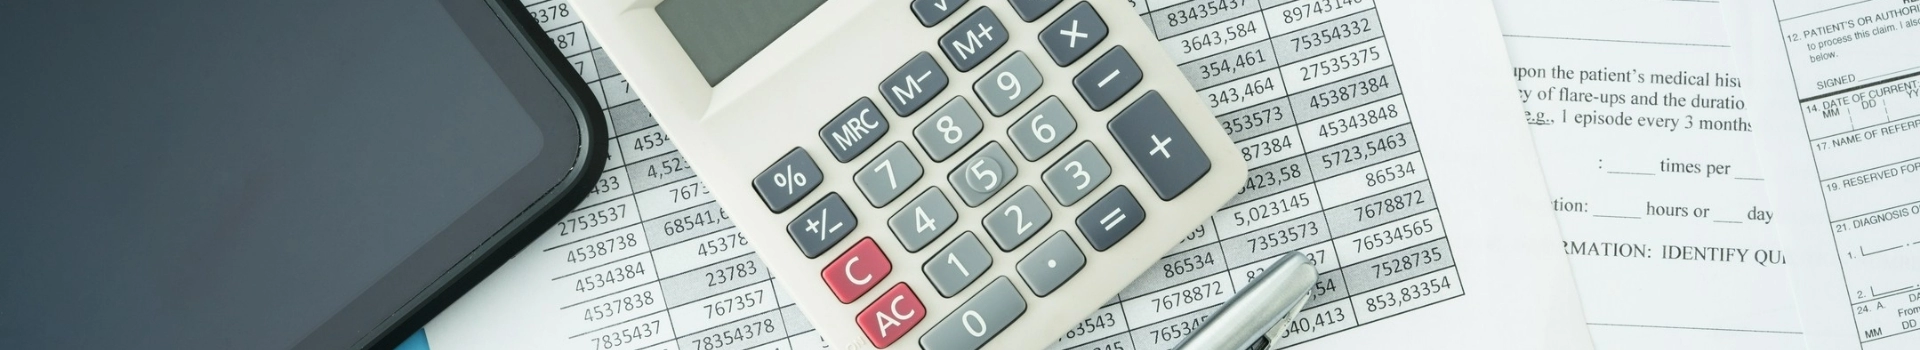 Tablet i kalkulator na wydrukowanych tabelkach tabelkach